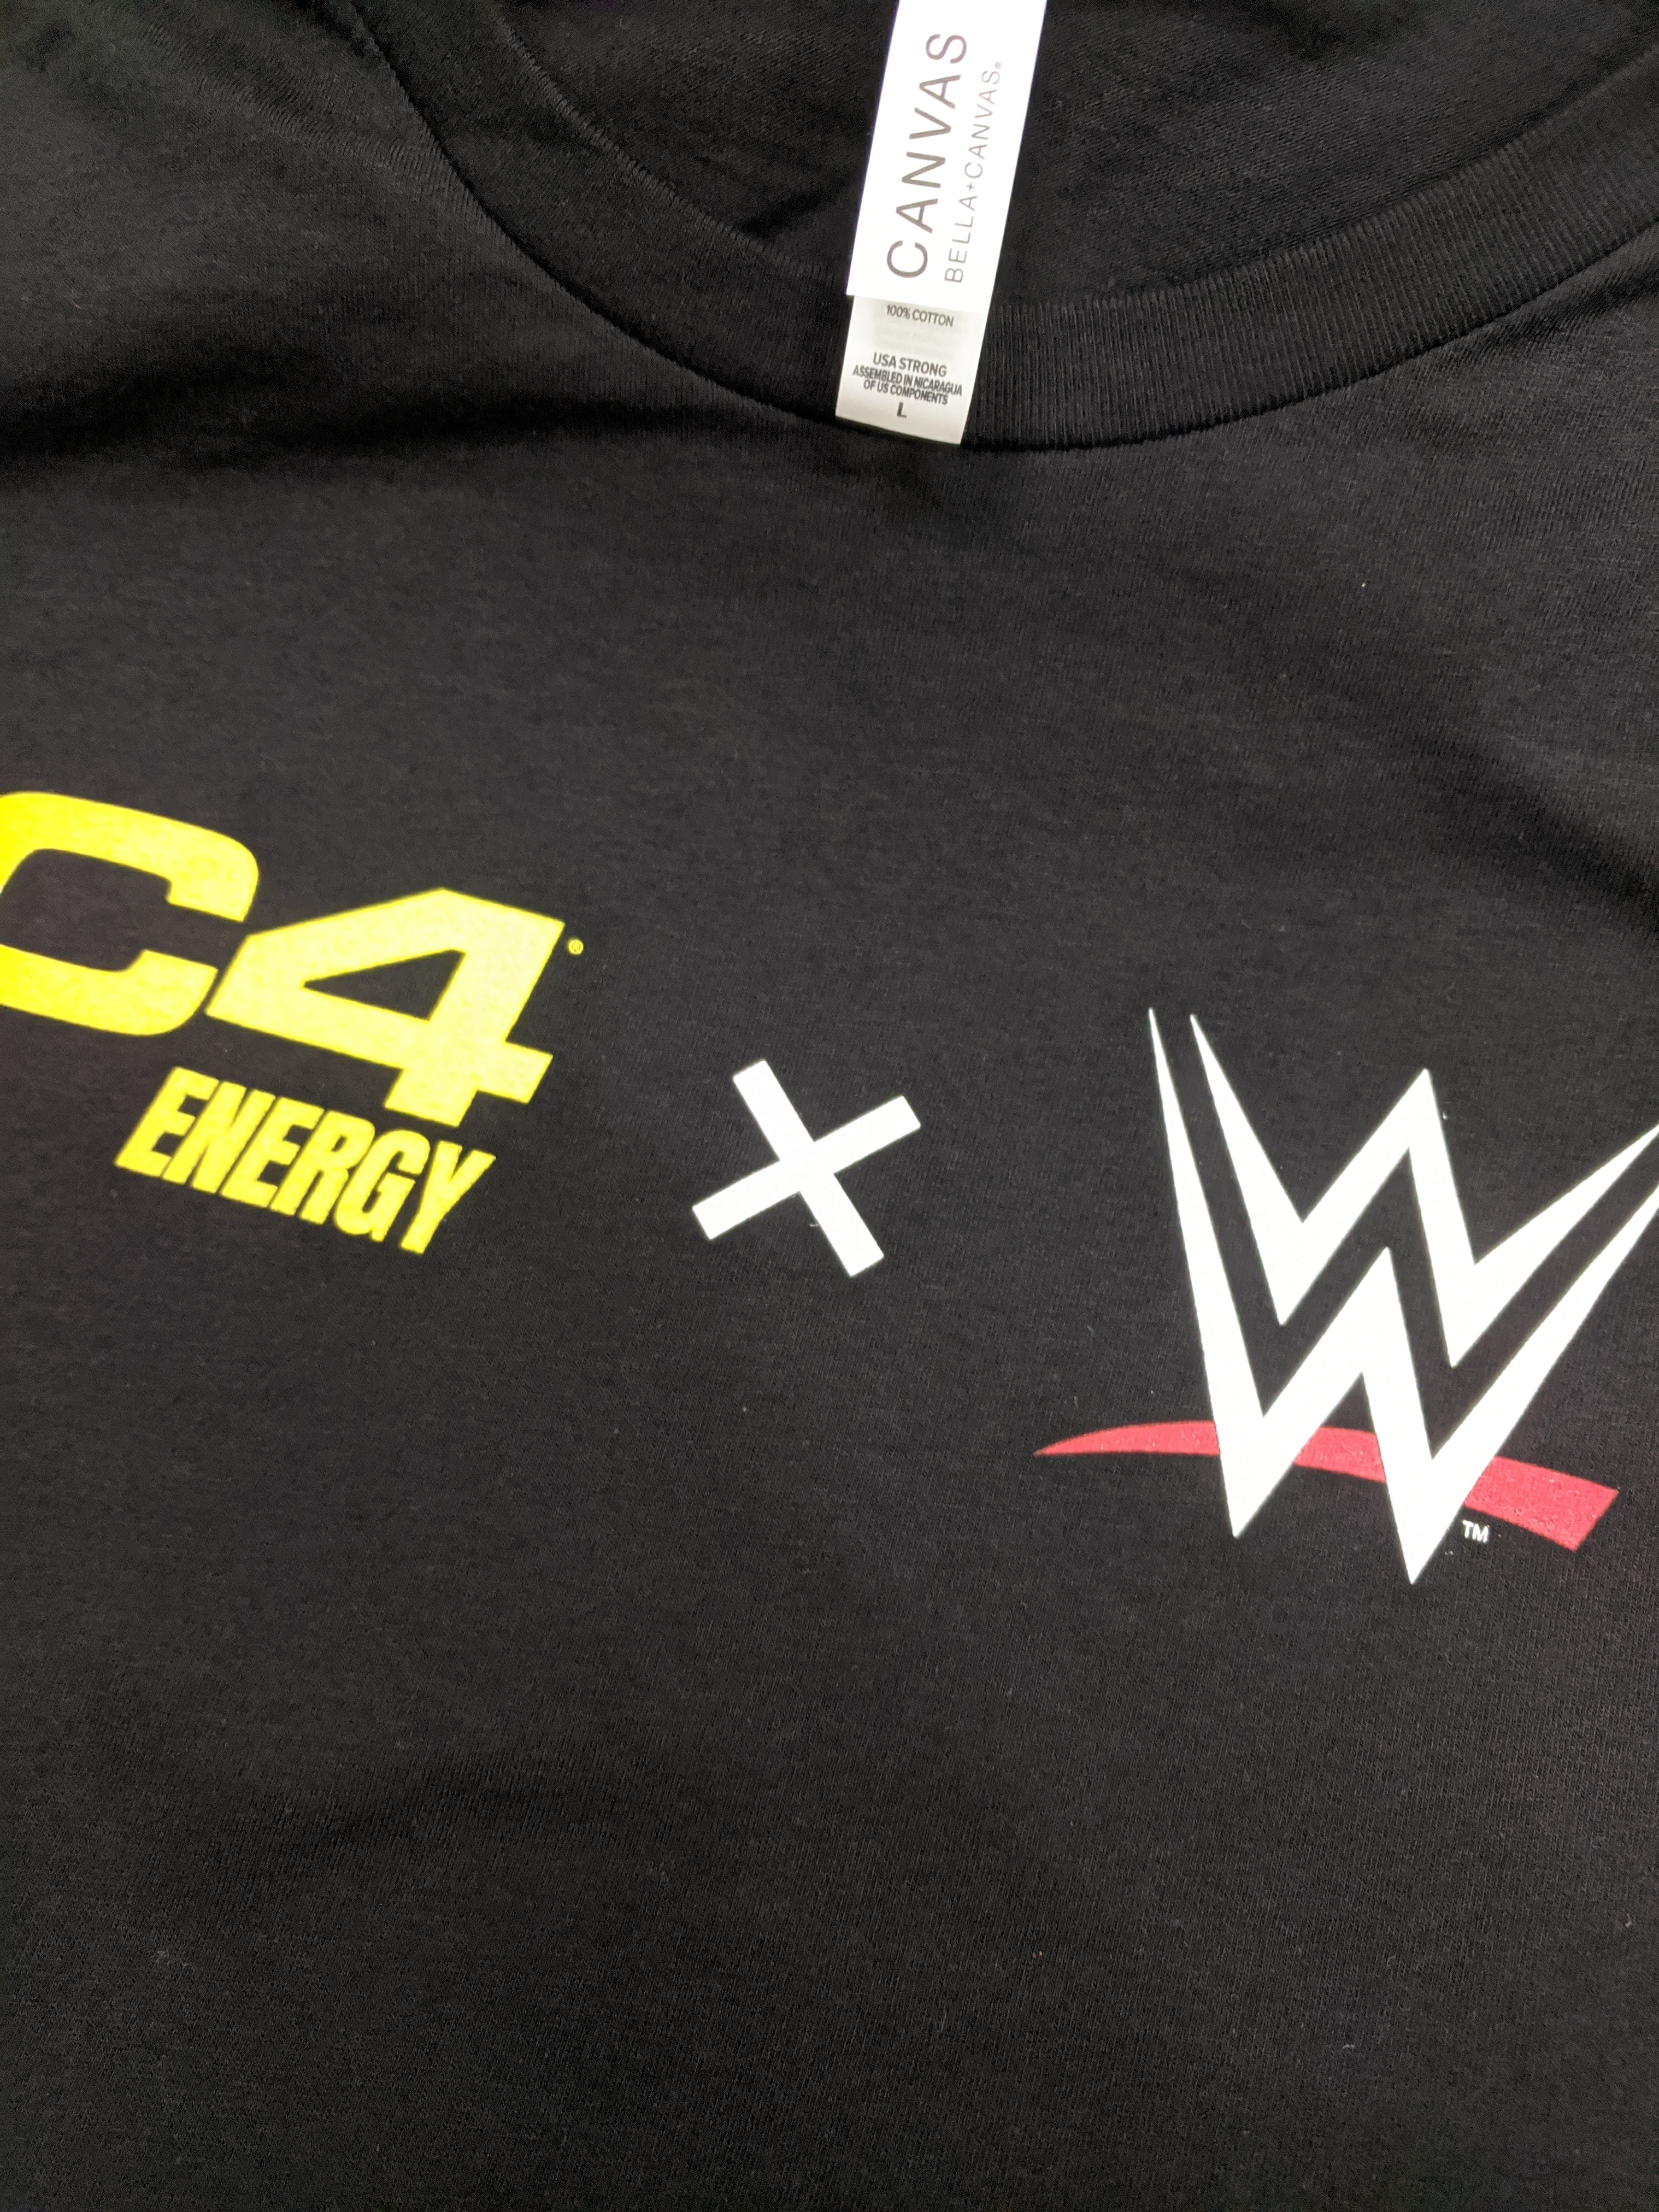 Screen printed C4 Energy WWE Tshirt